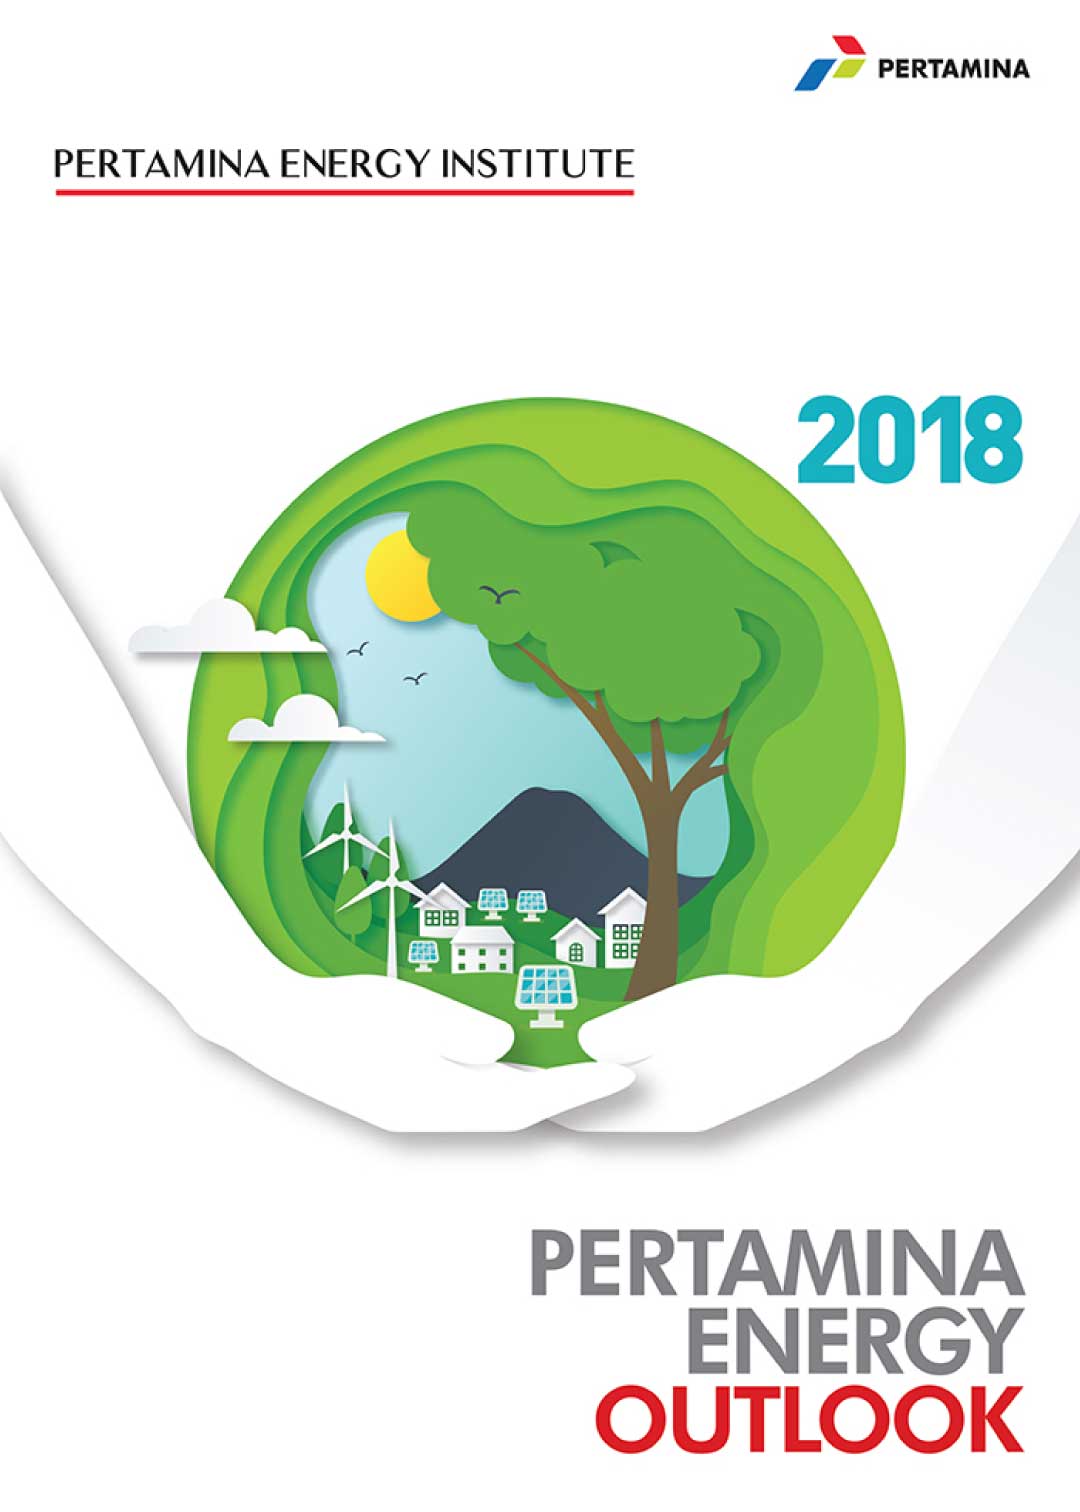 Pertamina Energy Outlook 2018